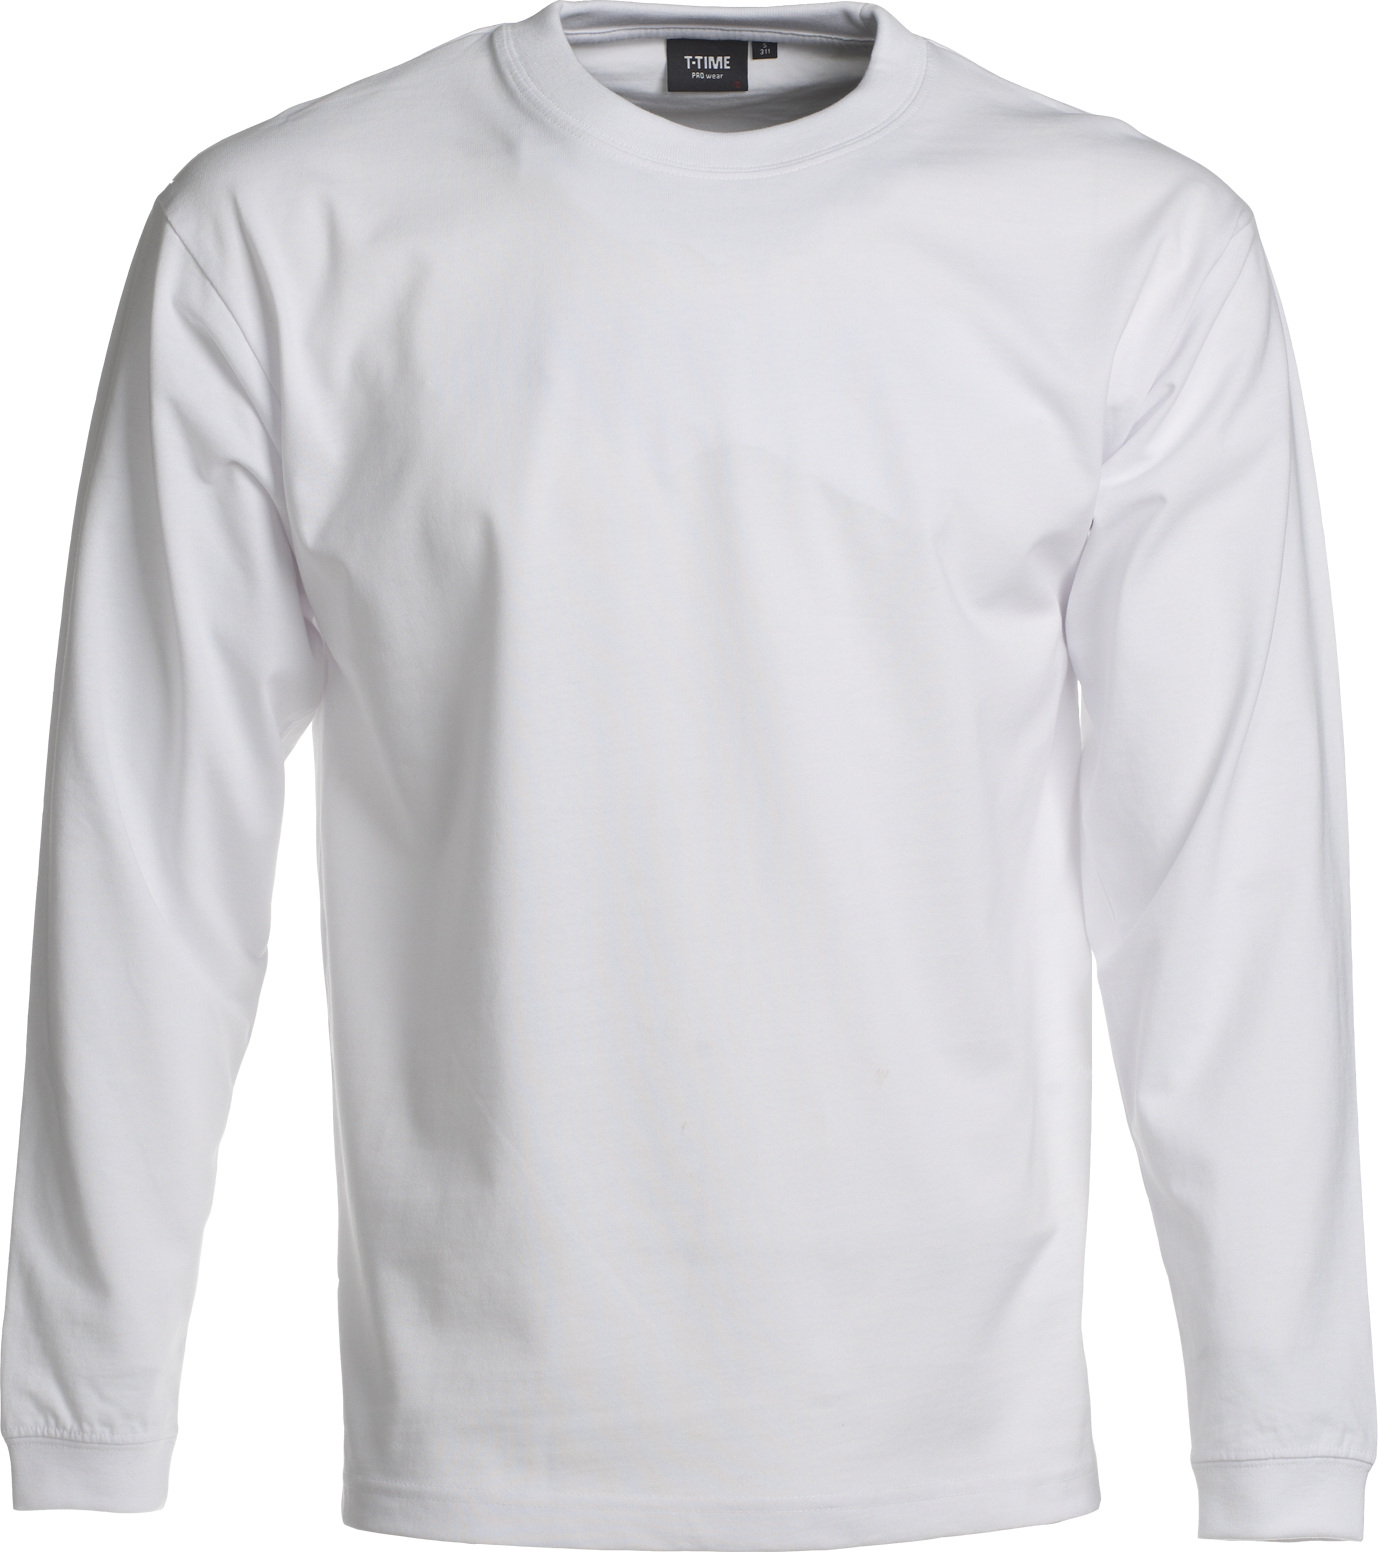 Vit Unisex T-shirt Lång ärm, Prowear, (8150221) 